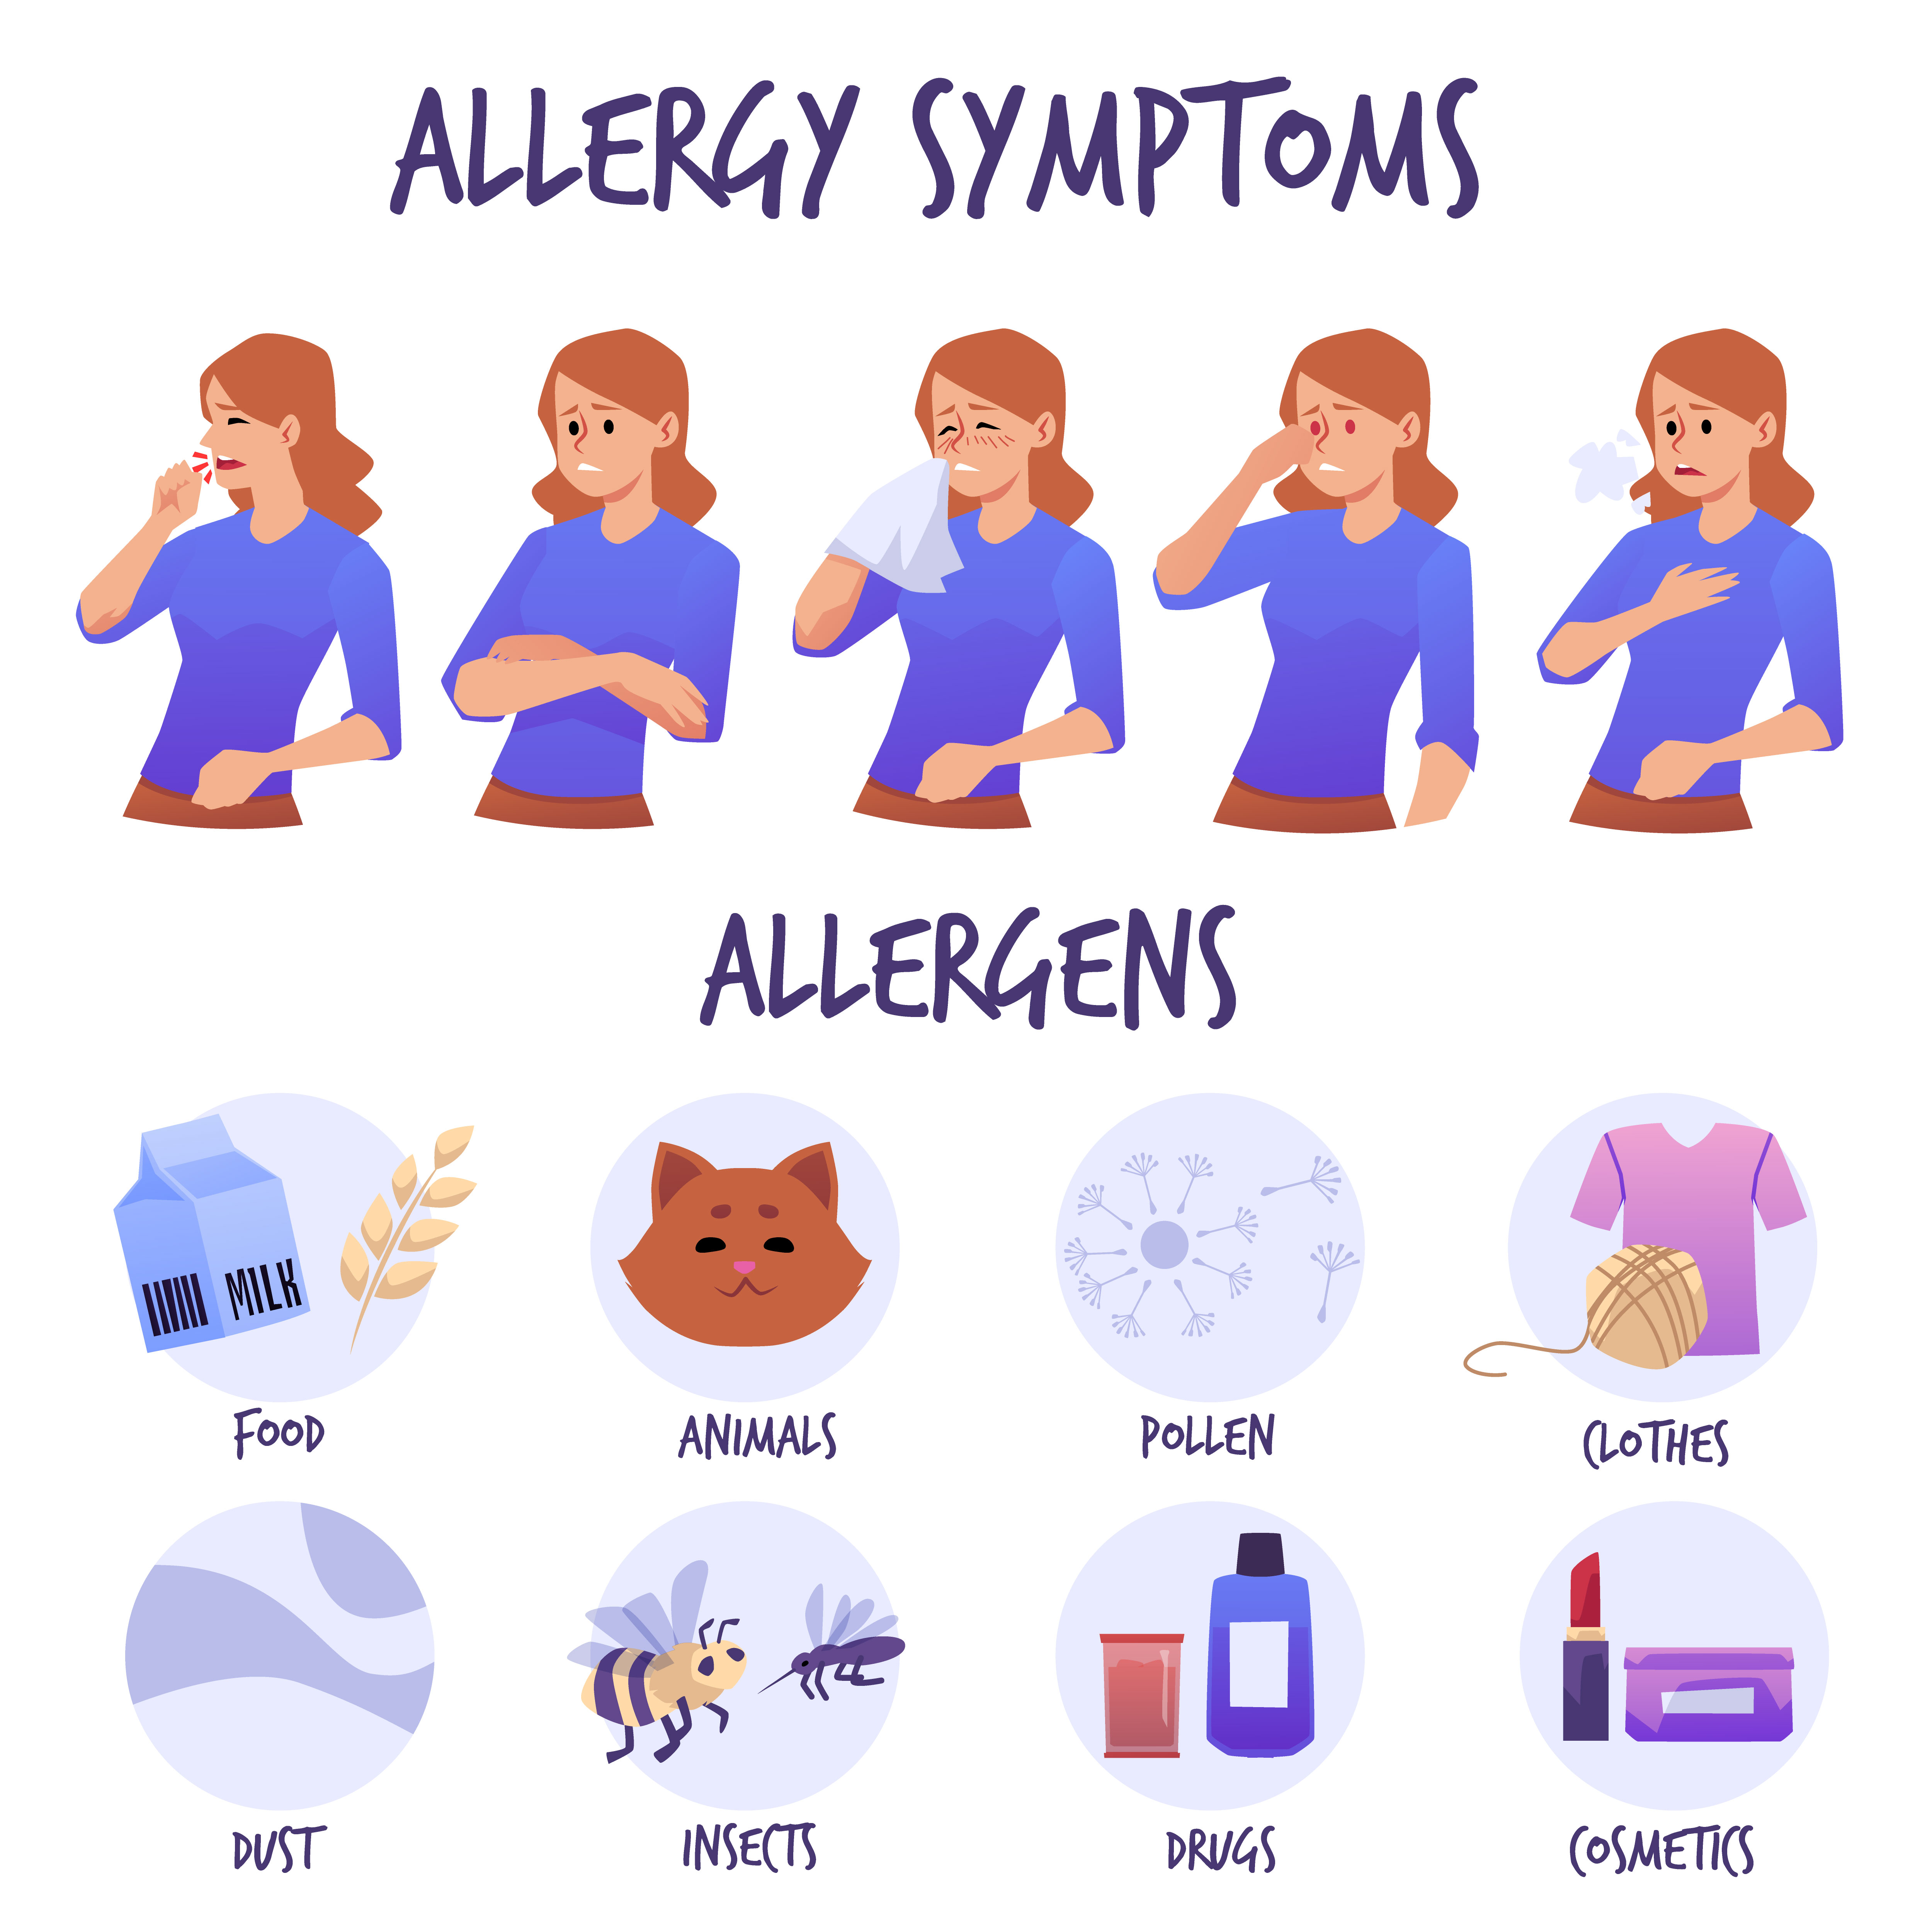 Allergies - Dr. Anthony Salzarulo